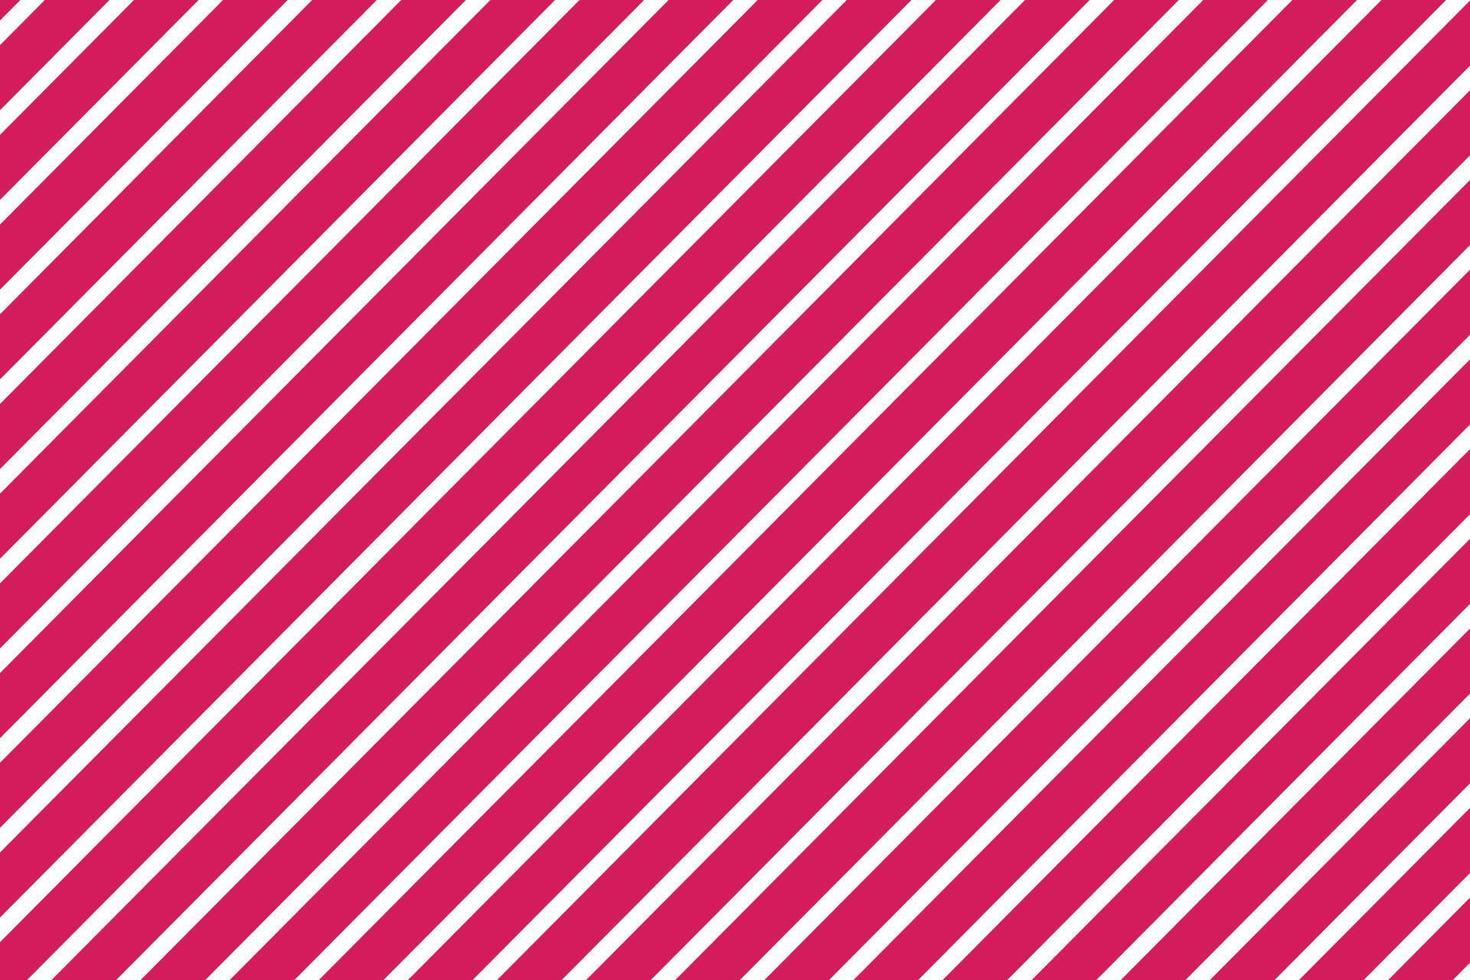 creative diagonal stripe straight lines pattern texture. vector